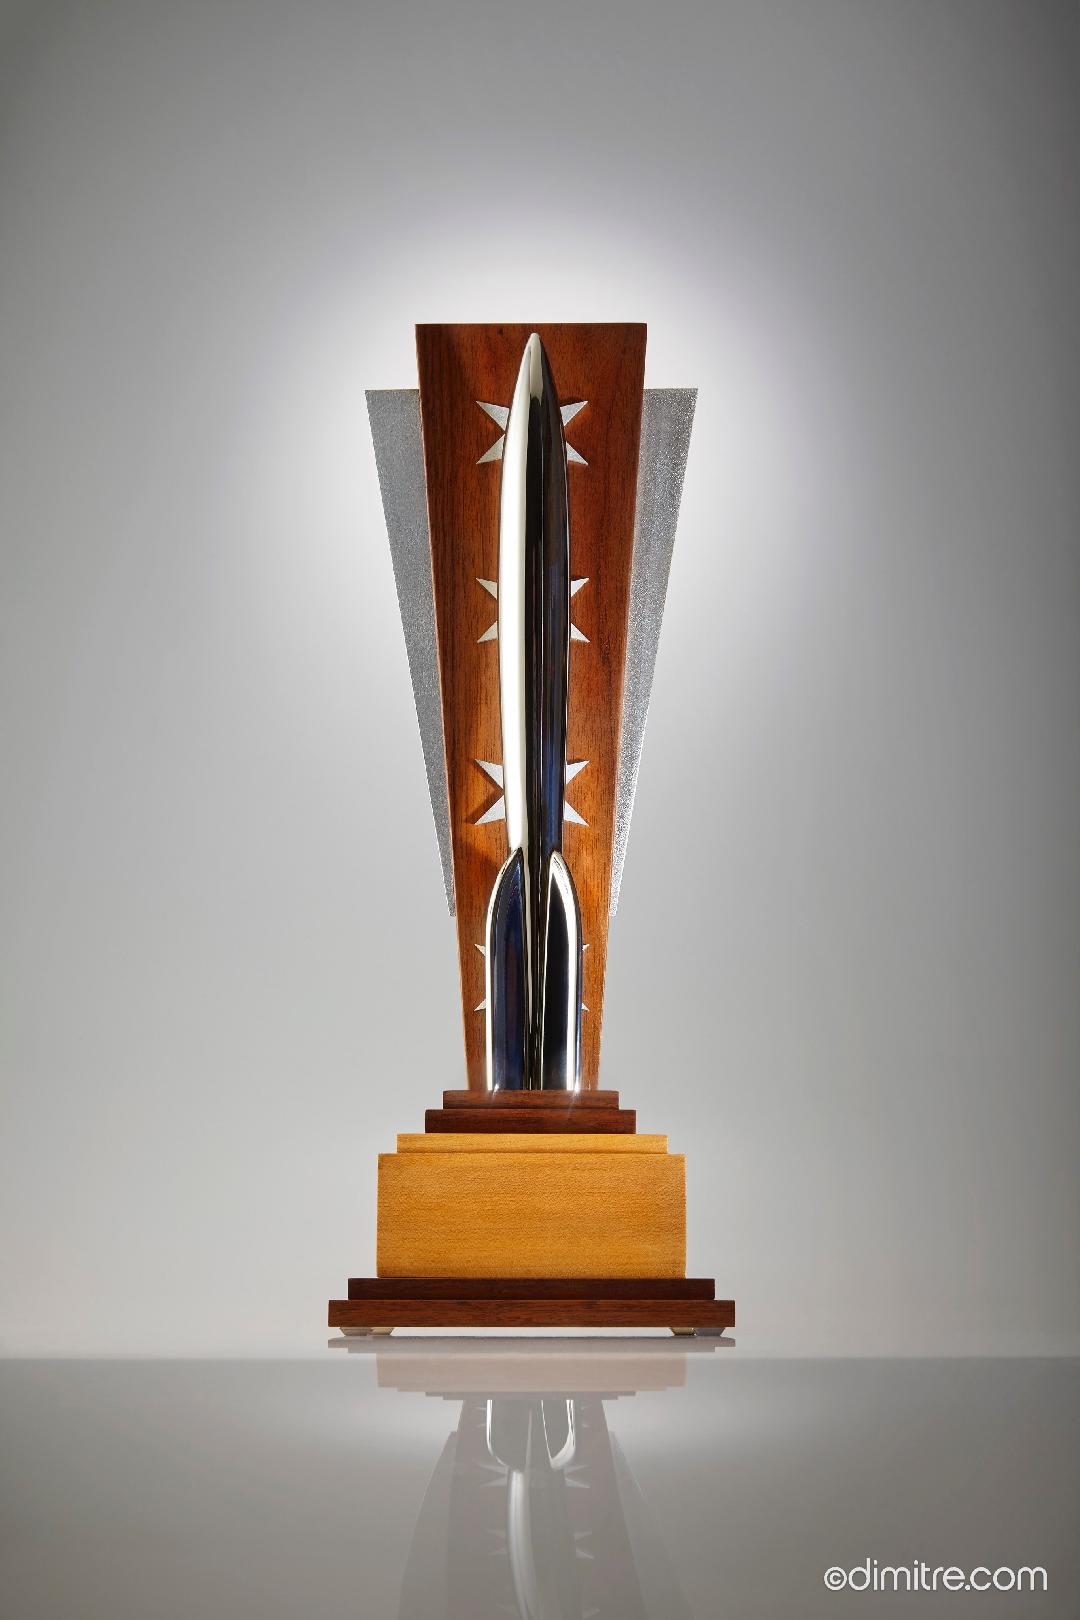 Rhode Island Novelty 6" Award TrophySet of 24 